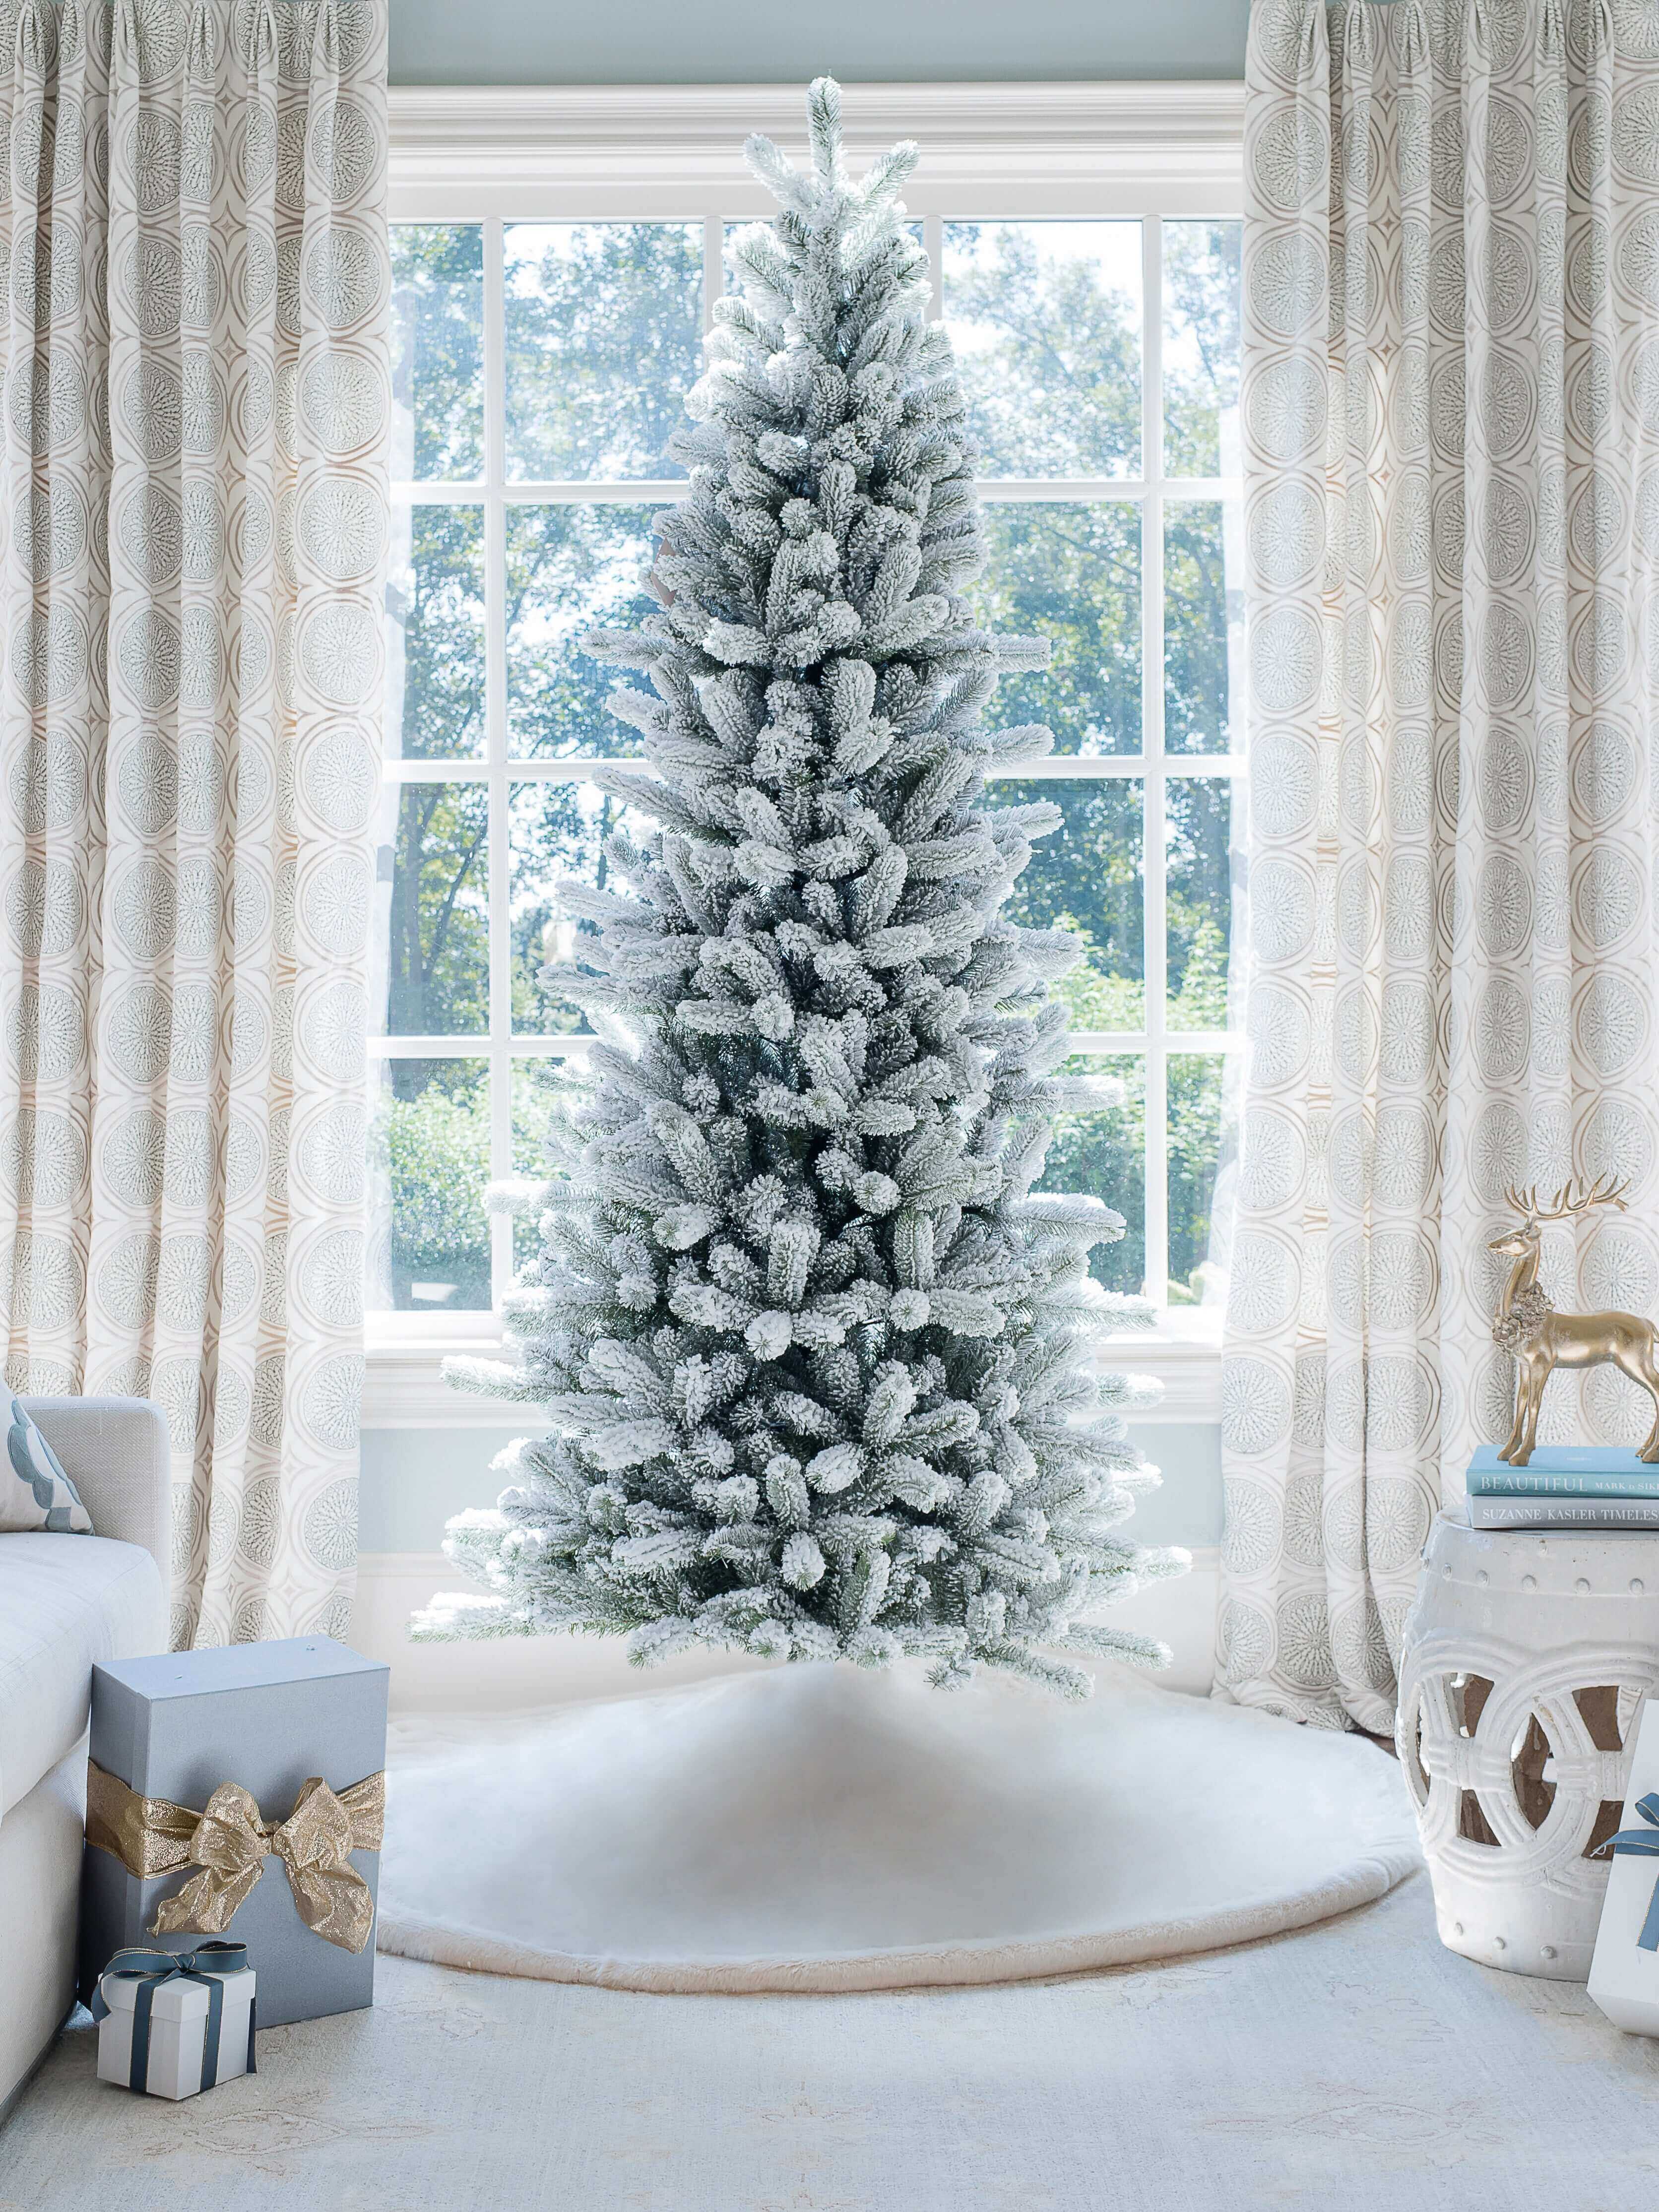 King of Christmas 10' King Flock® Slim Artificial Christmas Tree with 1000 Warm White LED Lights